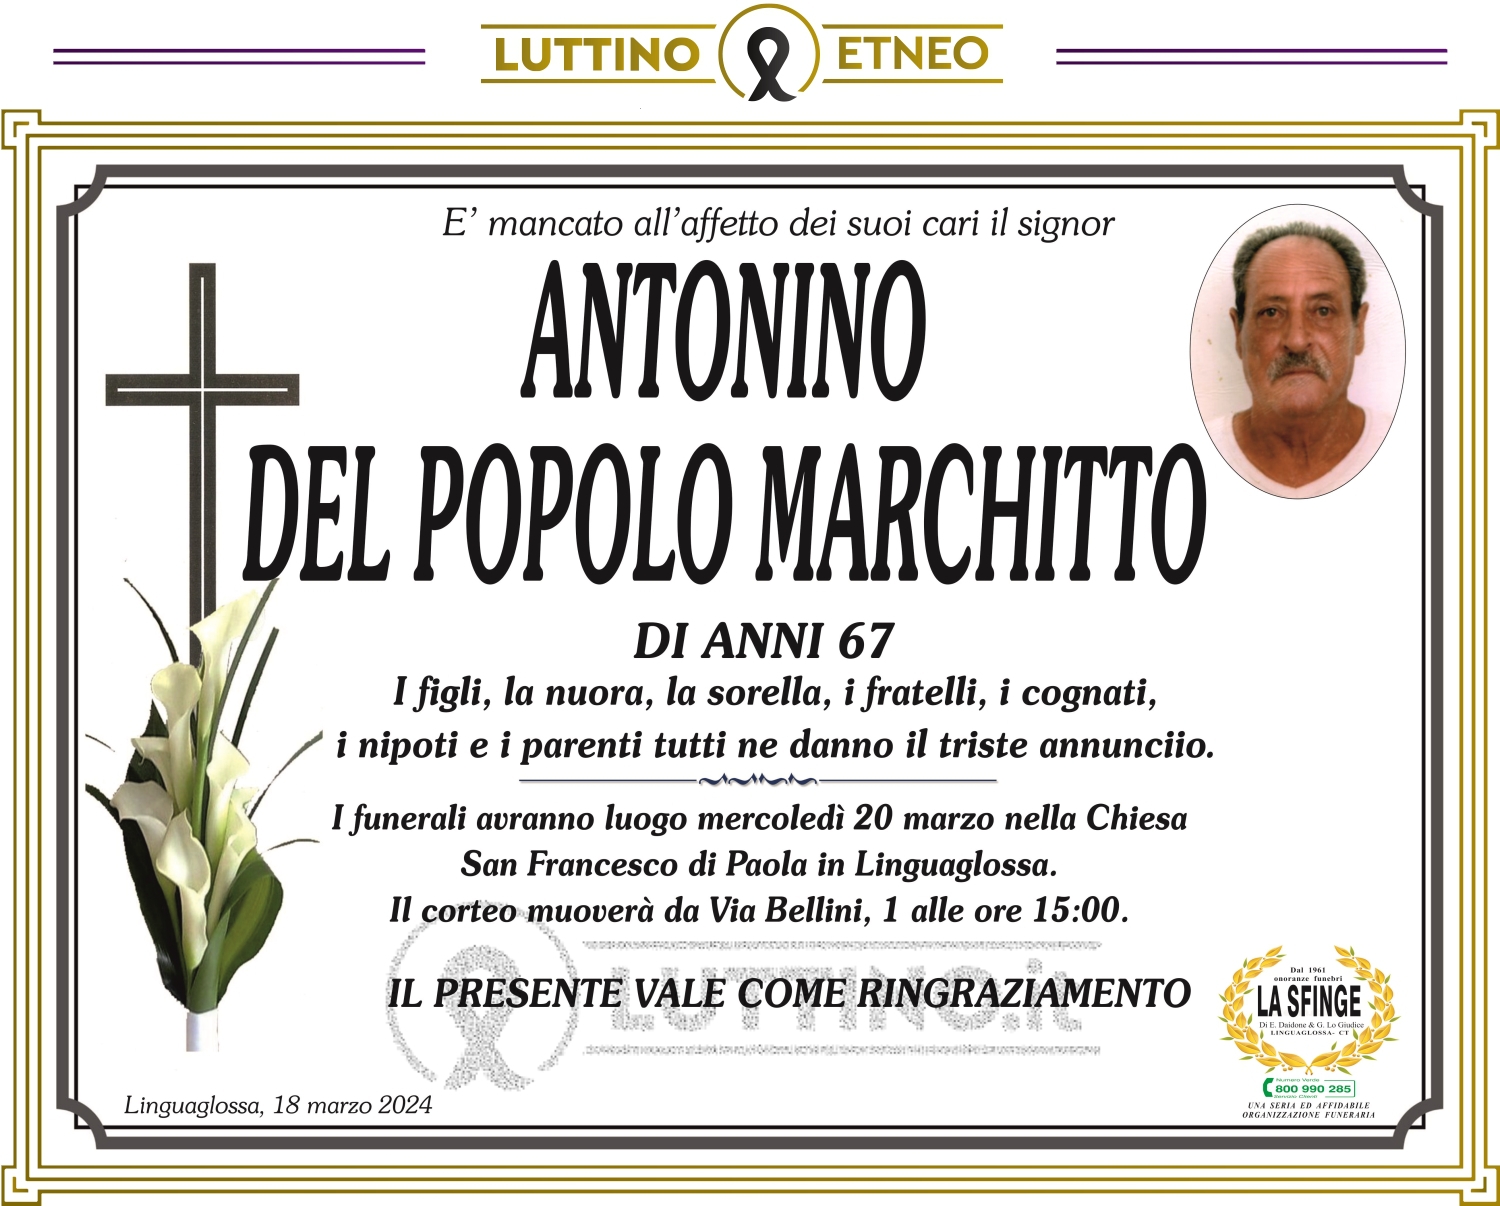 Antonino Del Popolo Marchitto